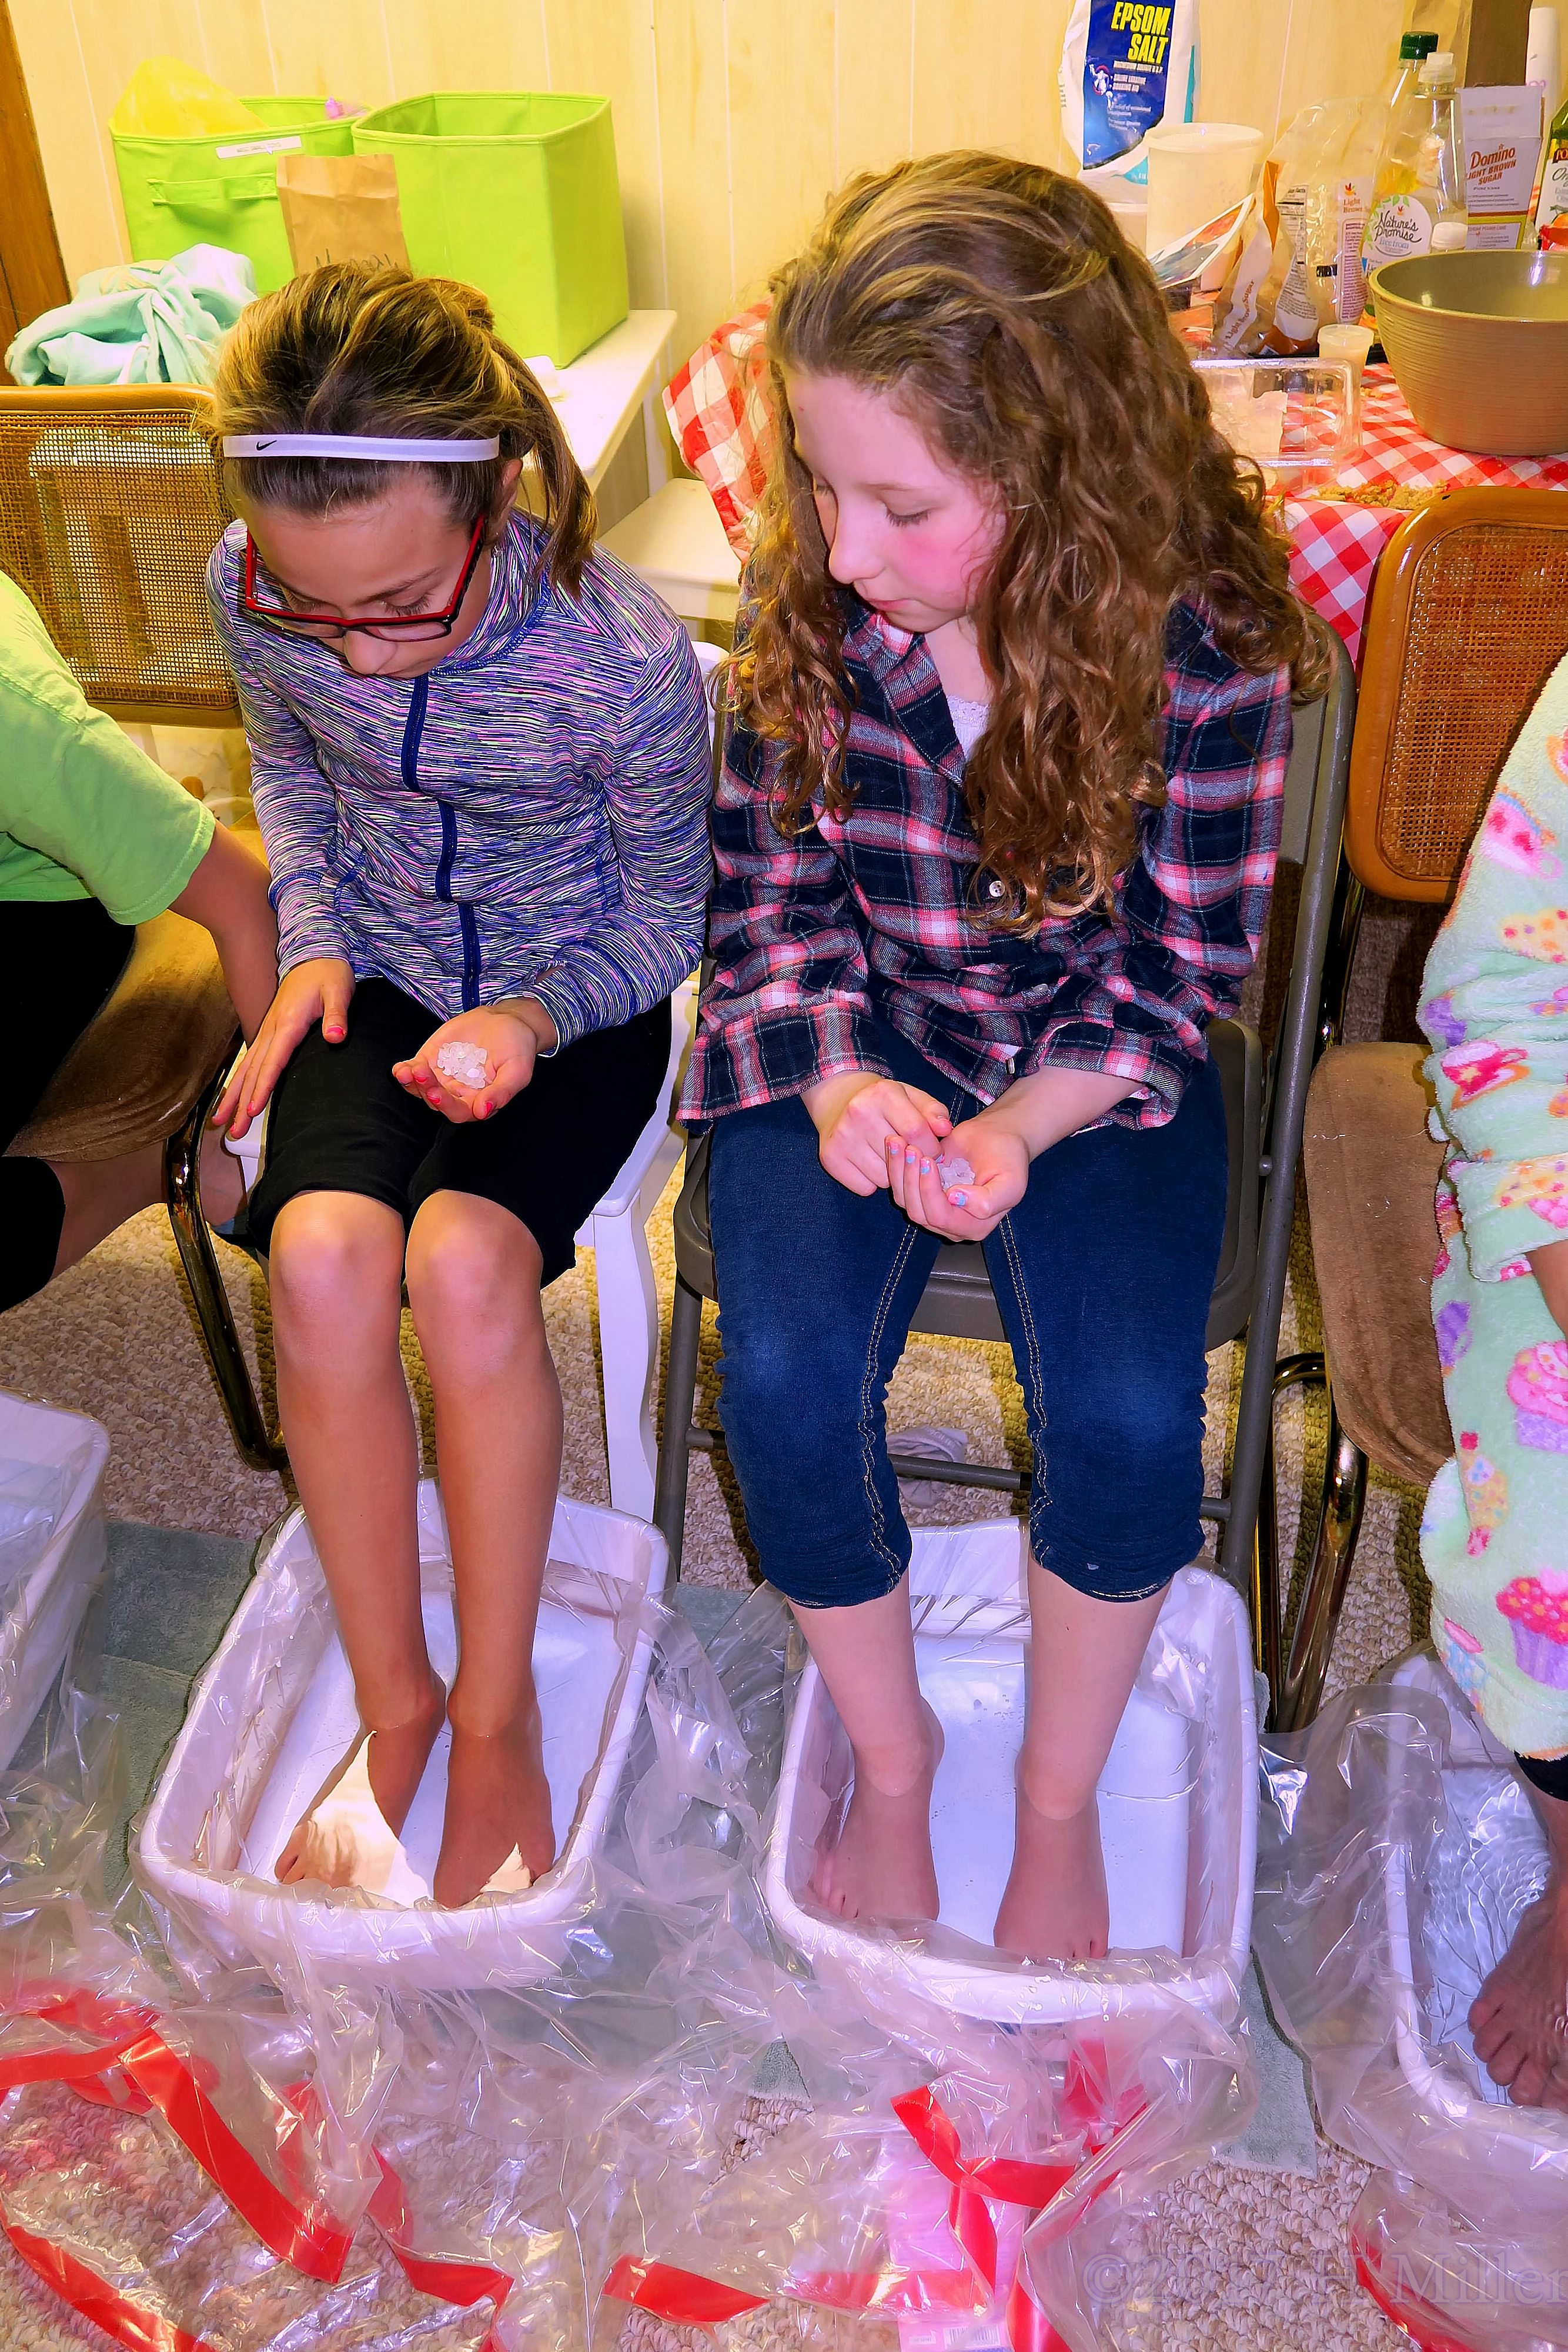 Putting The Salt In Their Footbaths During Kids Pedis. 4